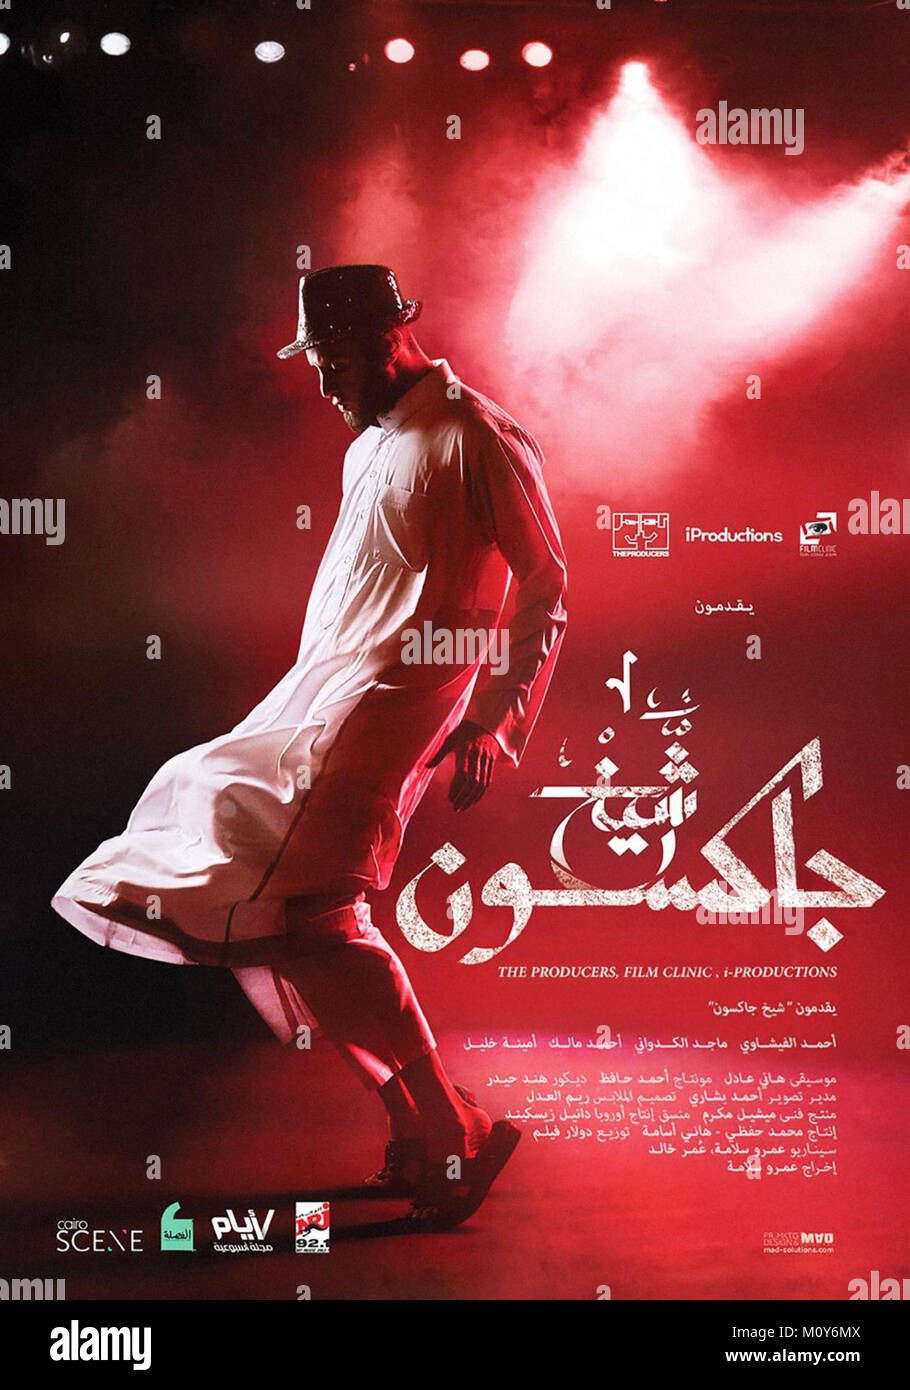 SHEIKH JACKSON, poster in Arabic, Ahmad El-Fishawi, 2017. ©Cleopatra Entertainment/courtesy Everett Collection Stock Photo